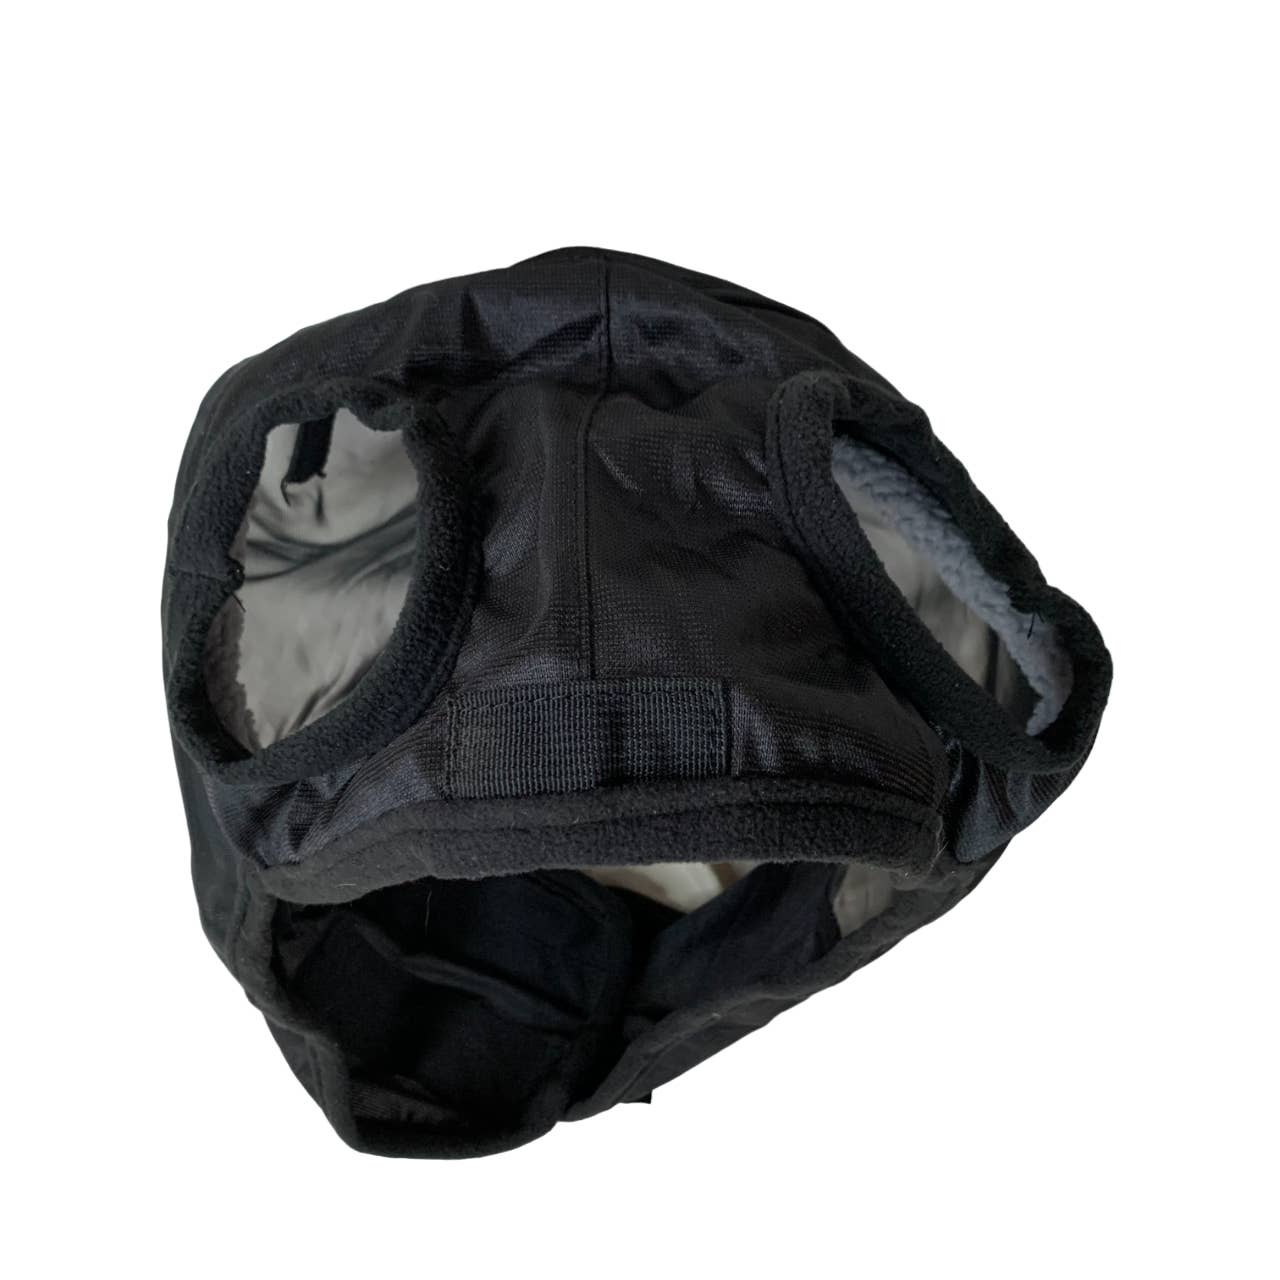 Harrison Howard 'Super Comfort' Fly Mask in Black - Extra Full